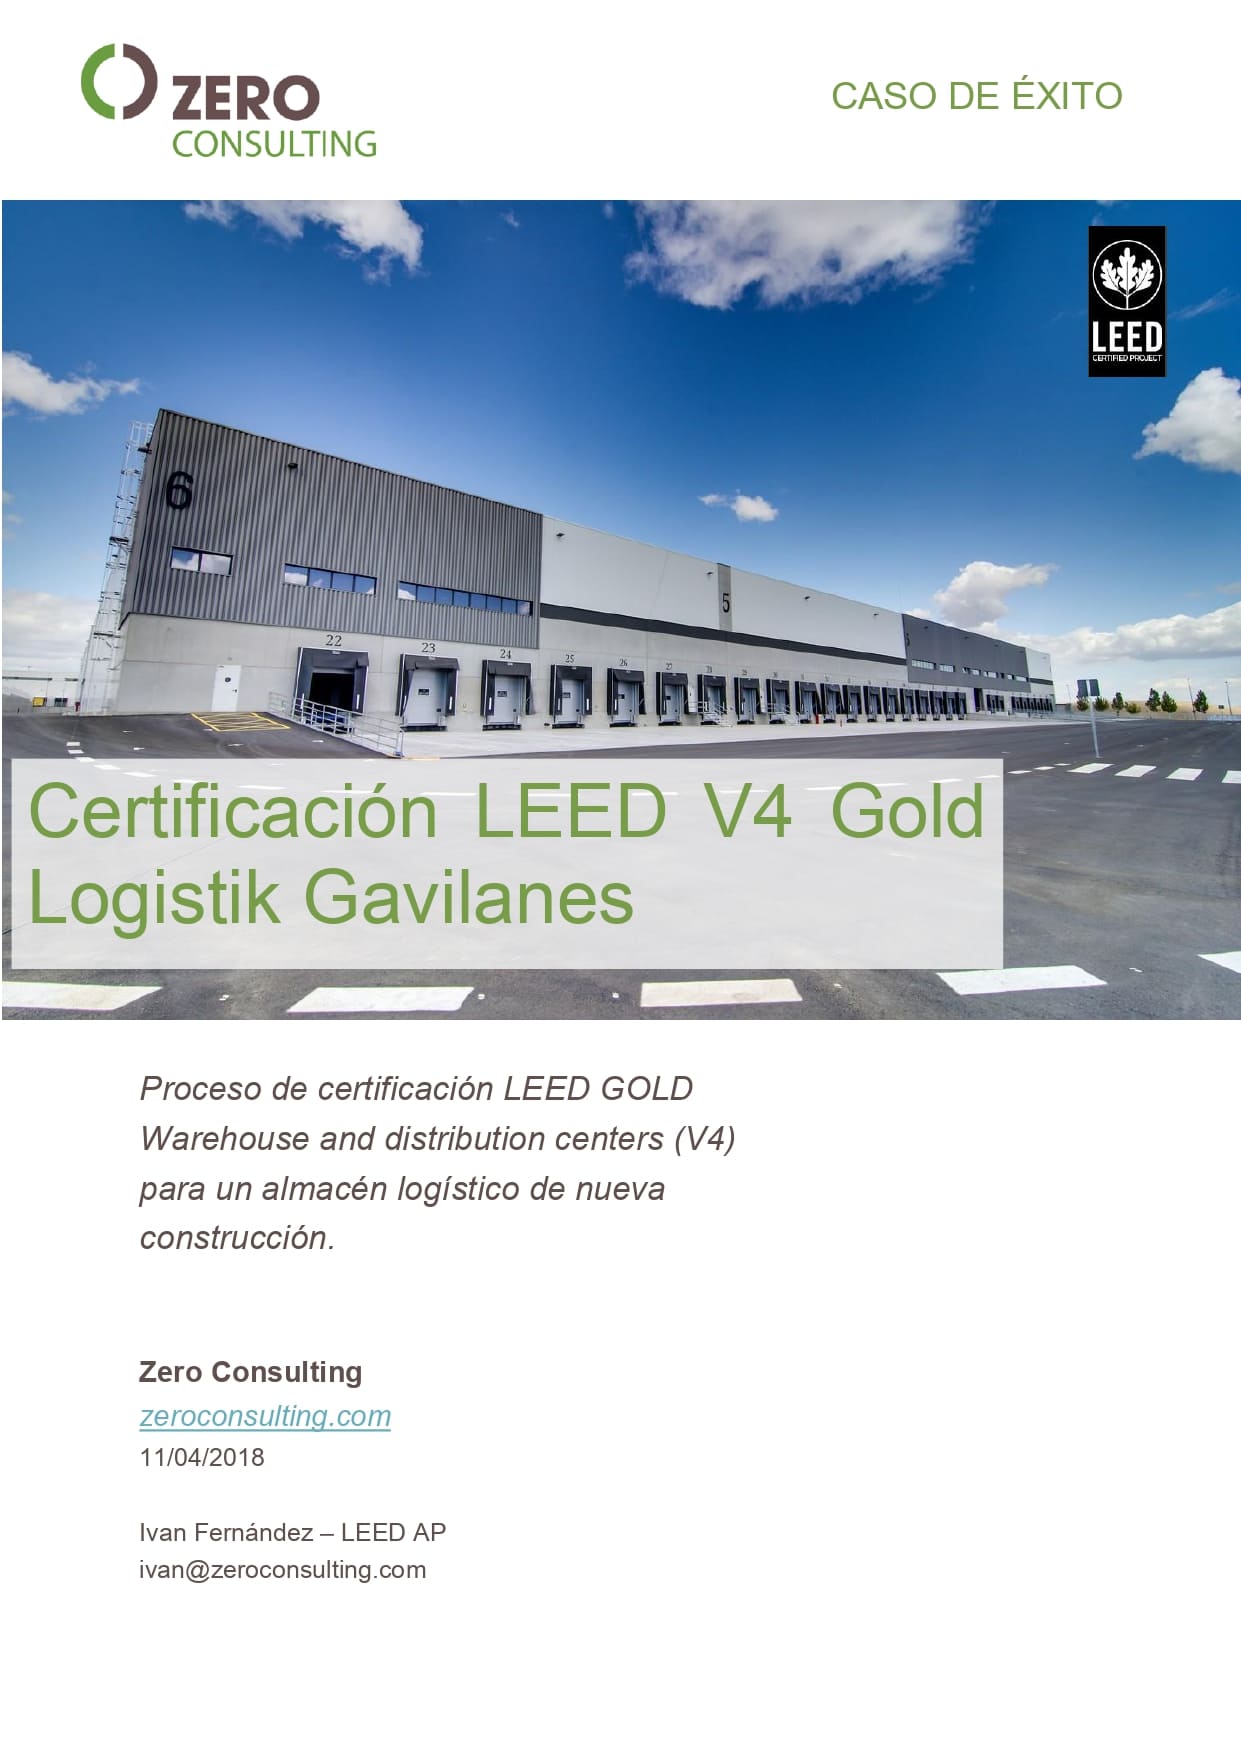 ZER - Portada E - Logistik Gavilanes Caso exito  